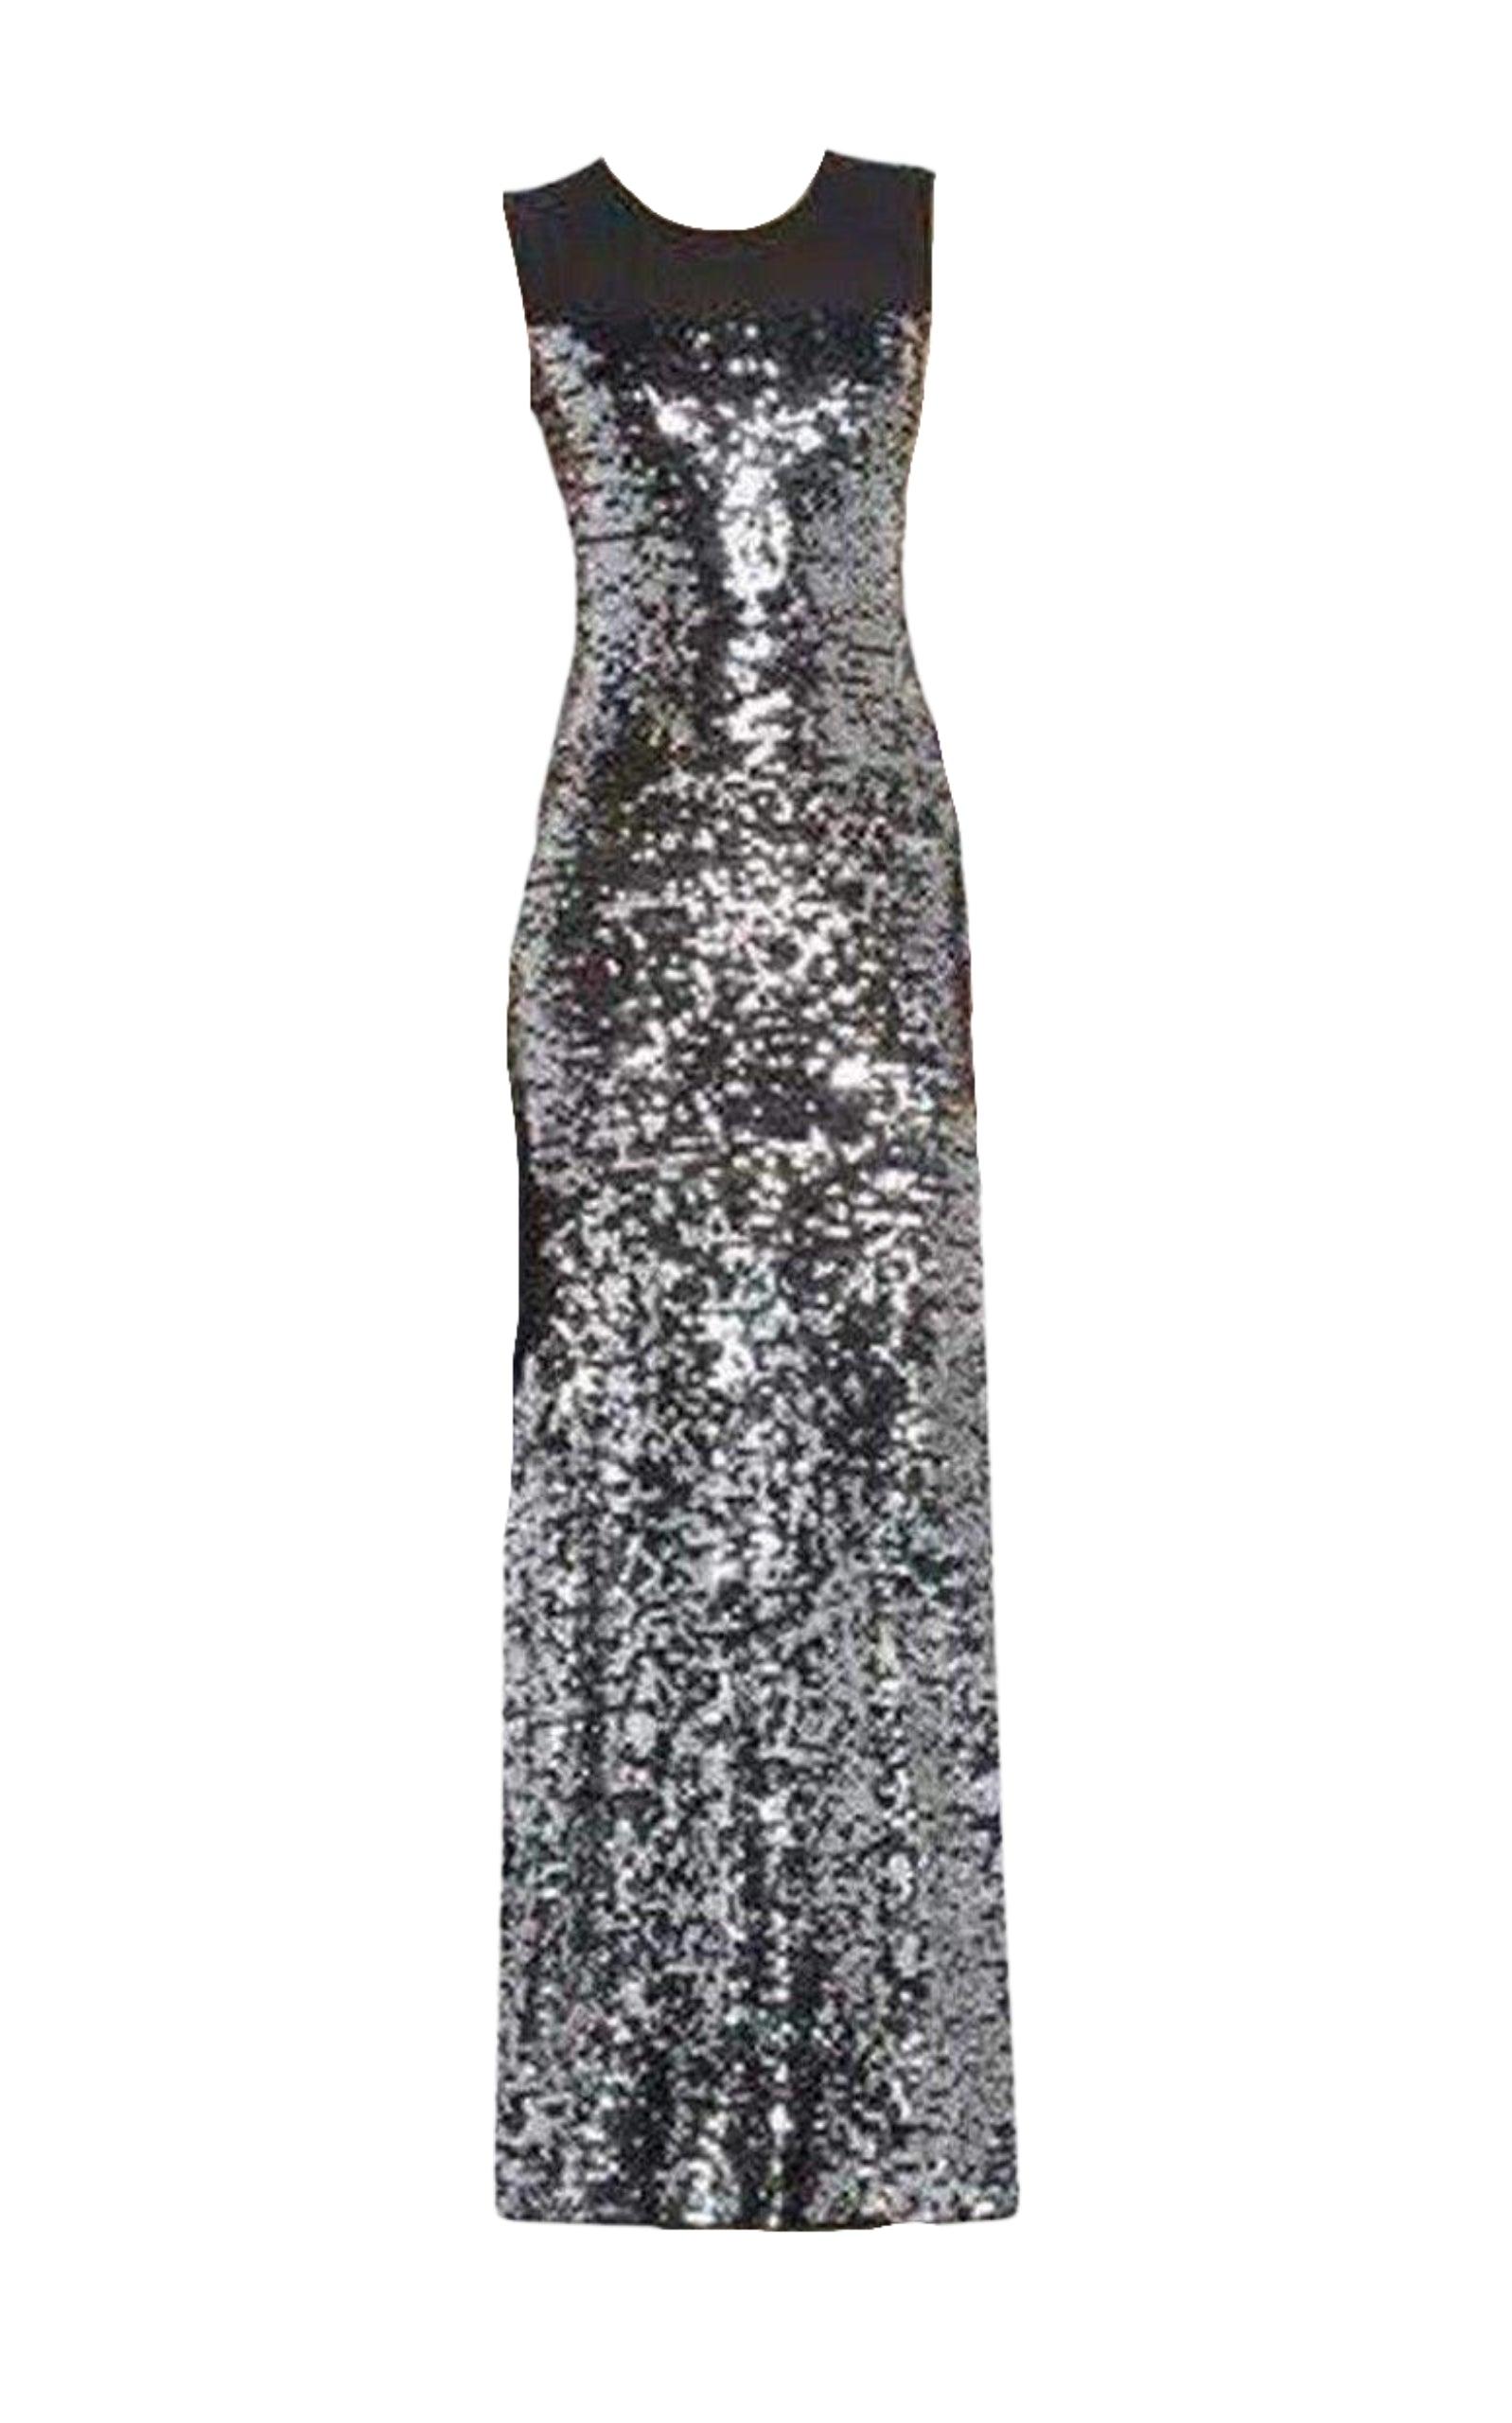  BCBGMAXAZRIASequinned Evening Dress - Runway Catalog